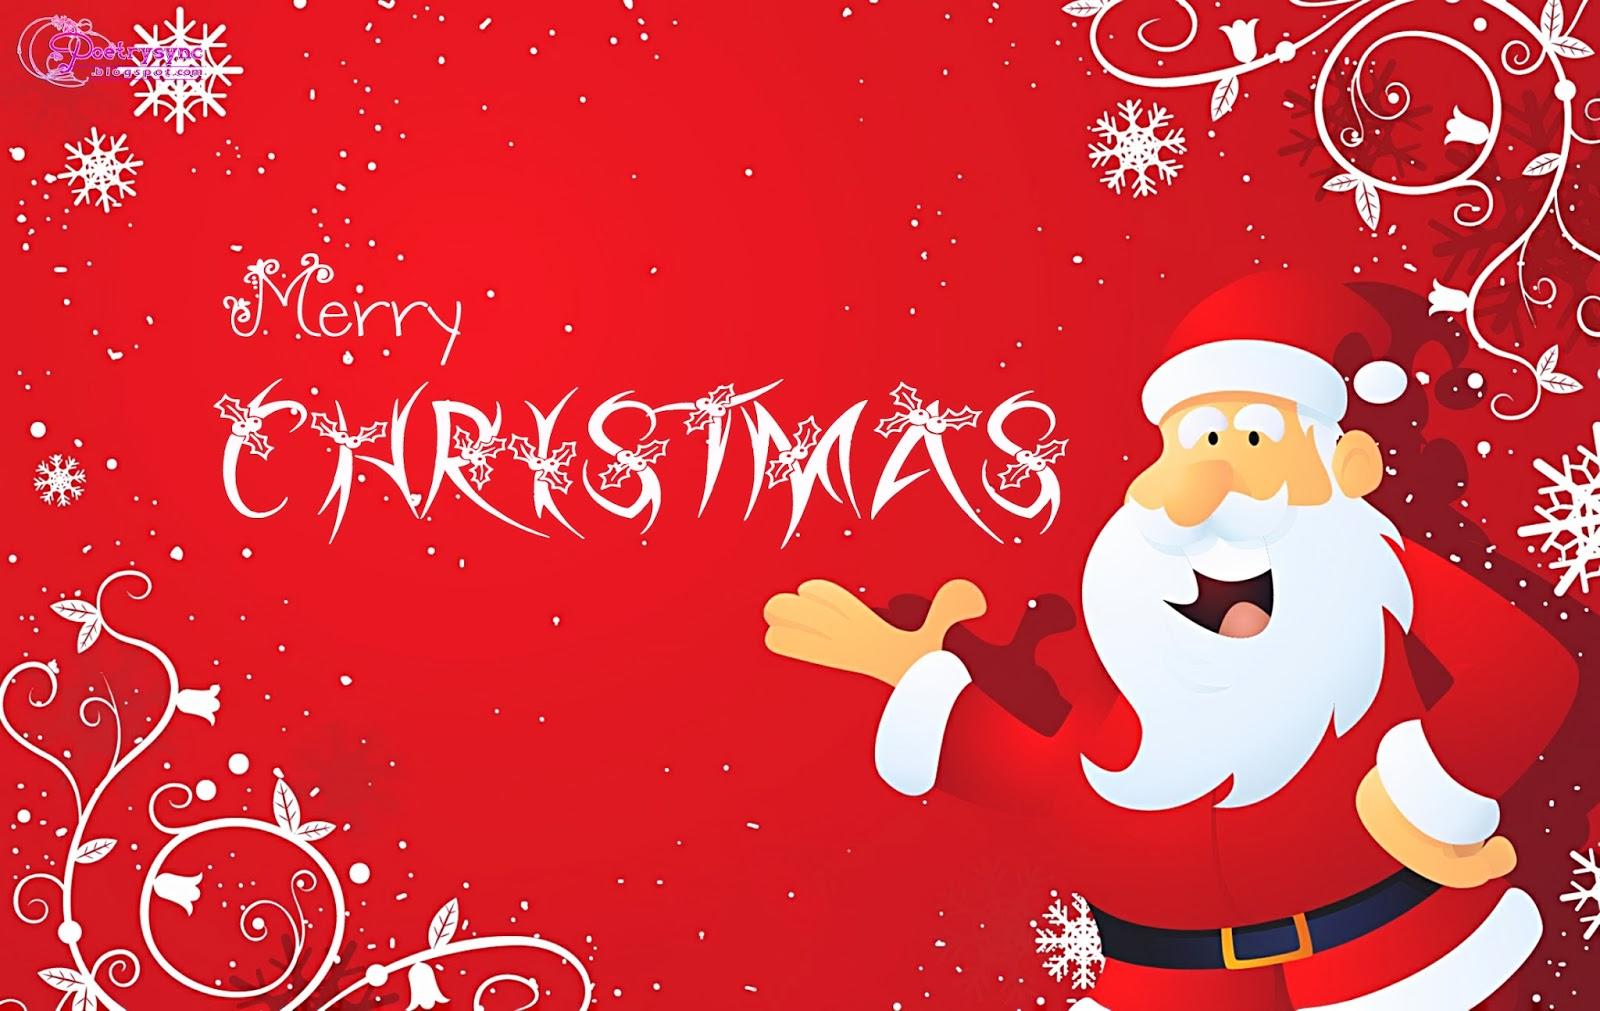 Merry Christmas Wishes Card Santa Claus Christmas Hd